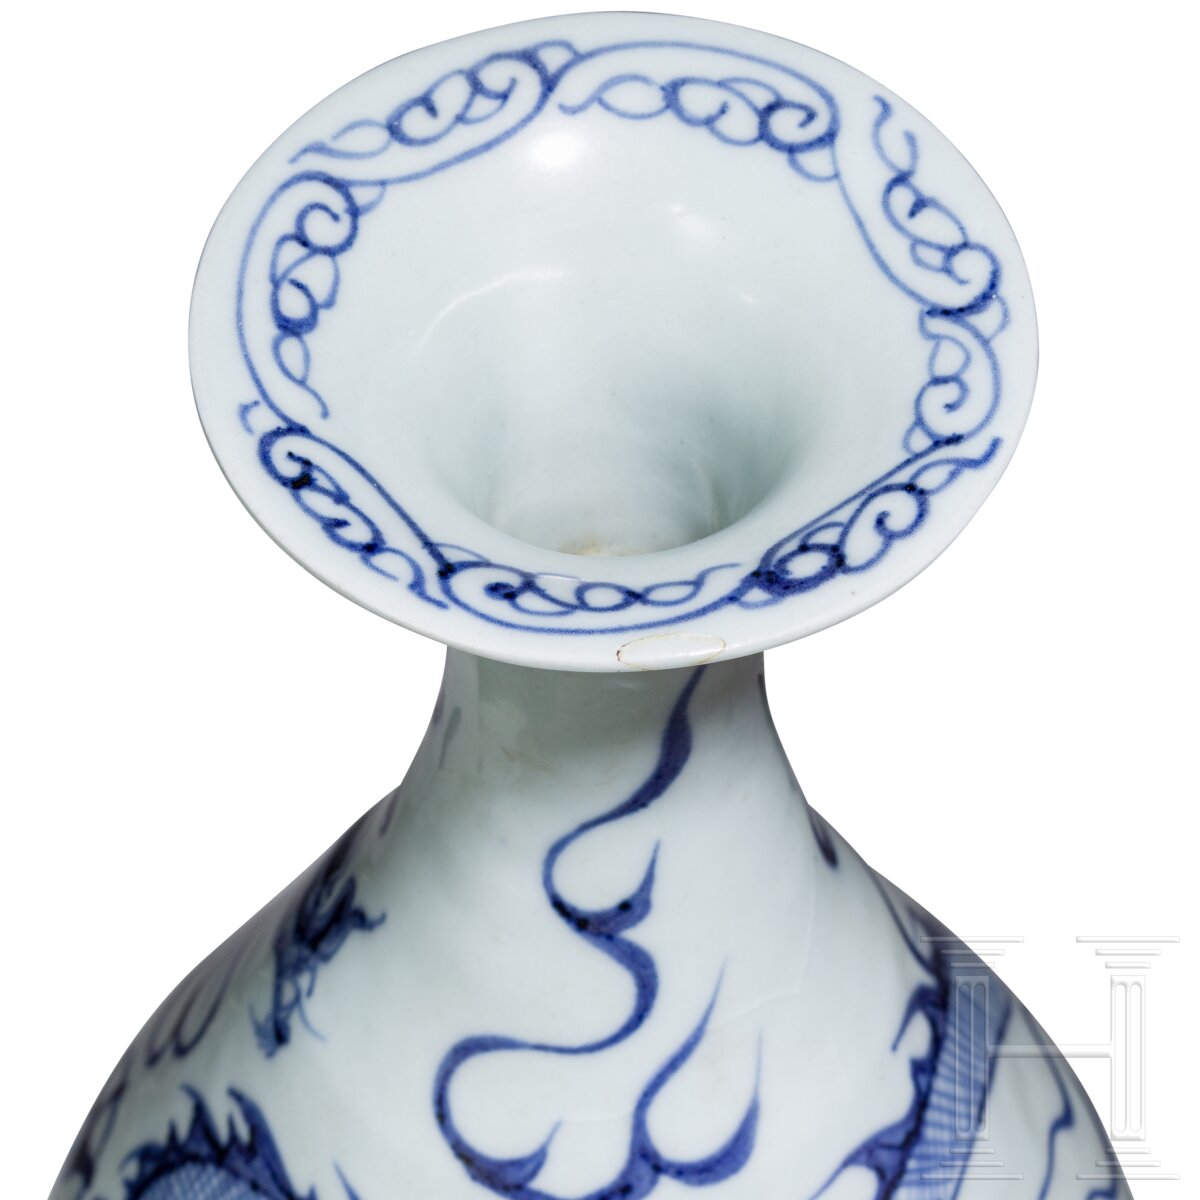 Birnenförmige blau-weiße Vase (Ping) mit Drache, China, wohl Yuan-Dynastie - Image 4 of 10